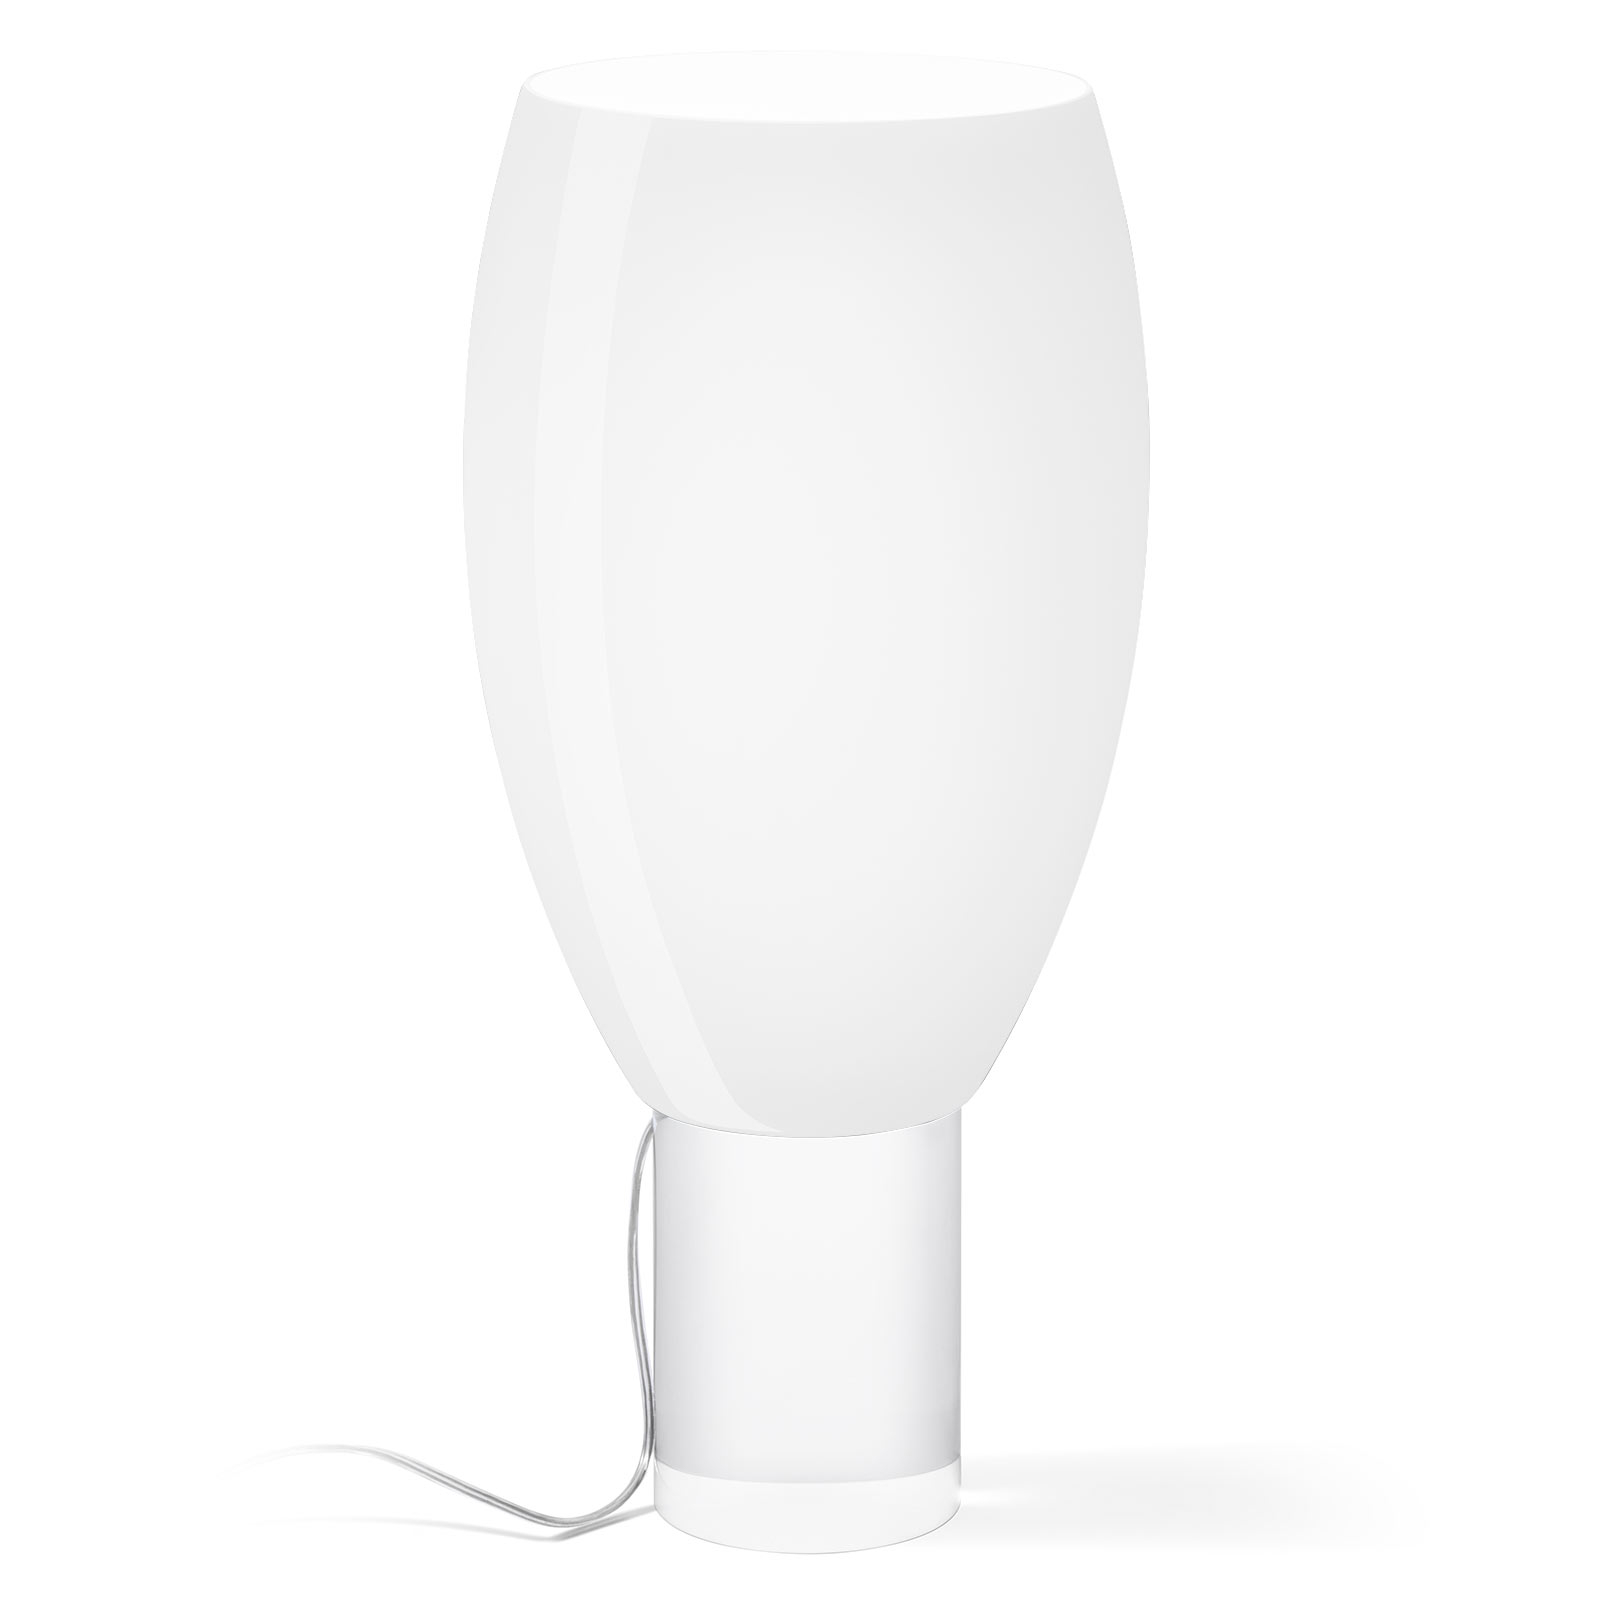 Foscarini Buds 1 table lamp, white bud-shaped